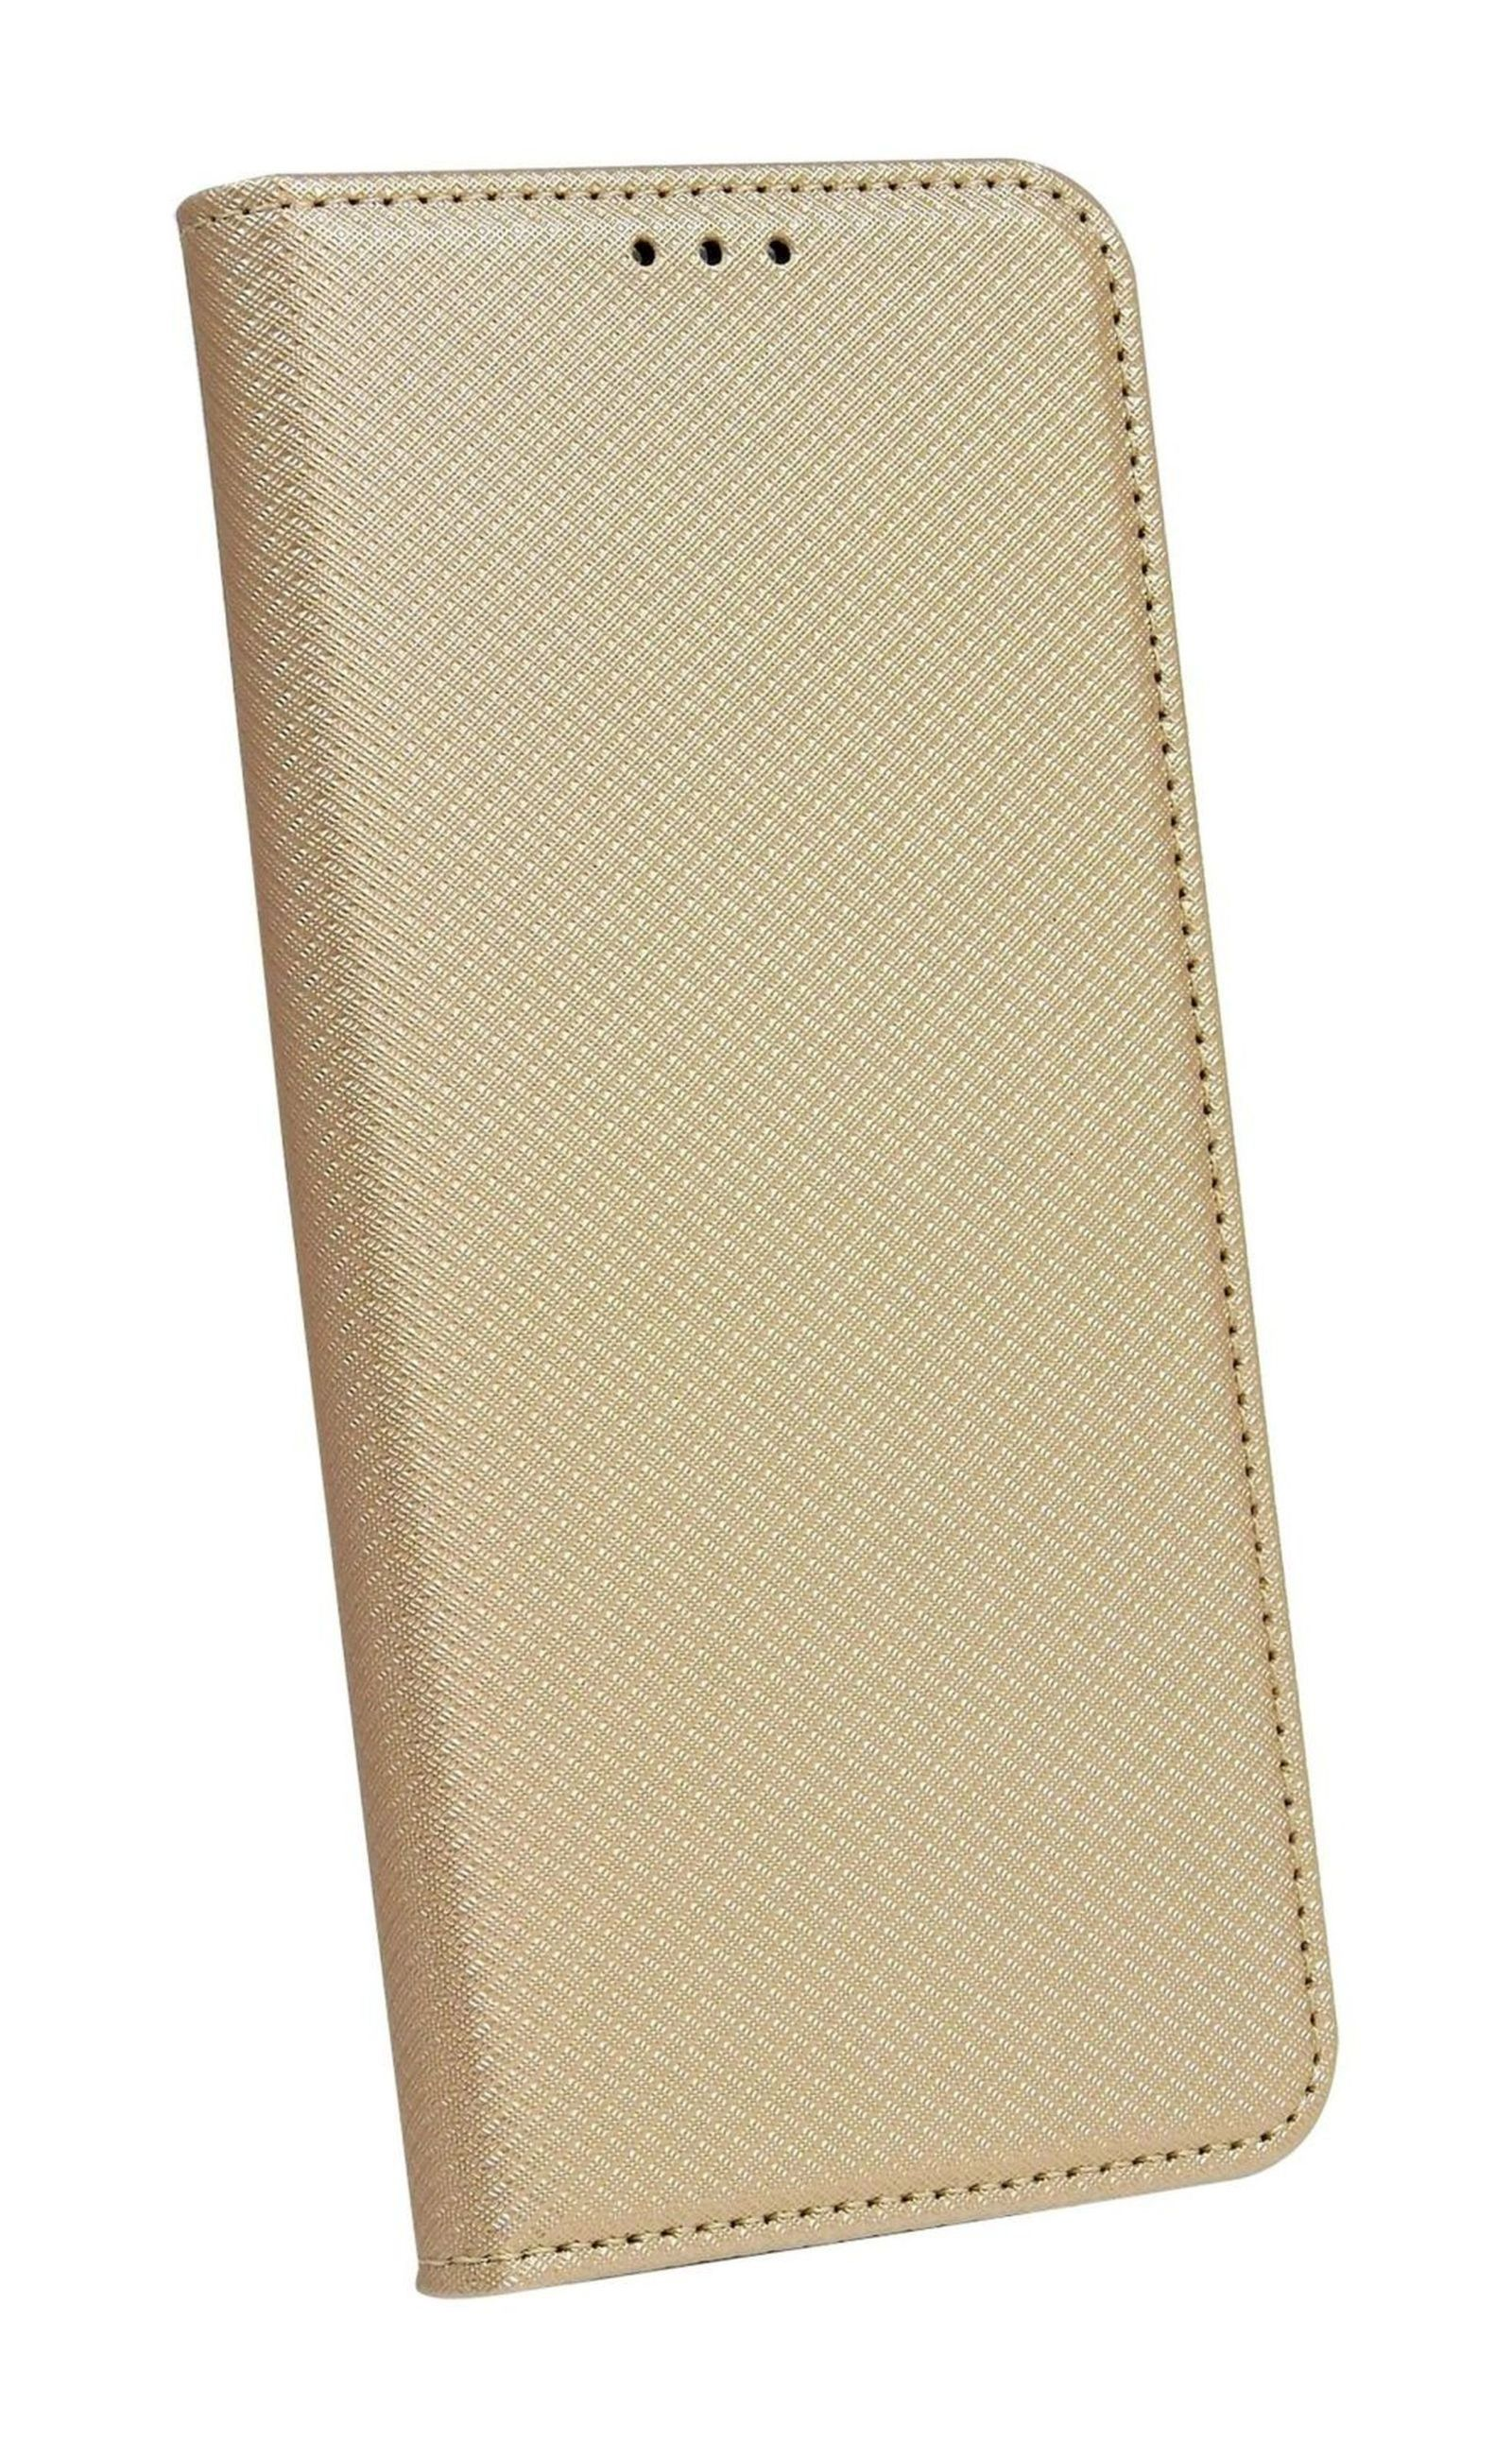 COFI Smart, 3.4, Nokia, Gold Bookcover